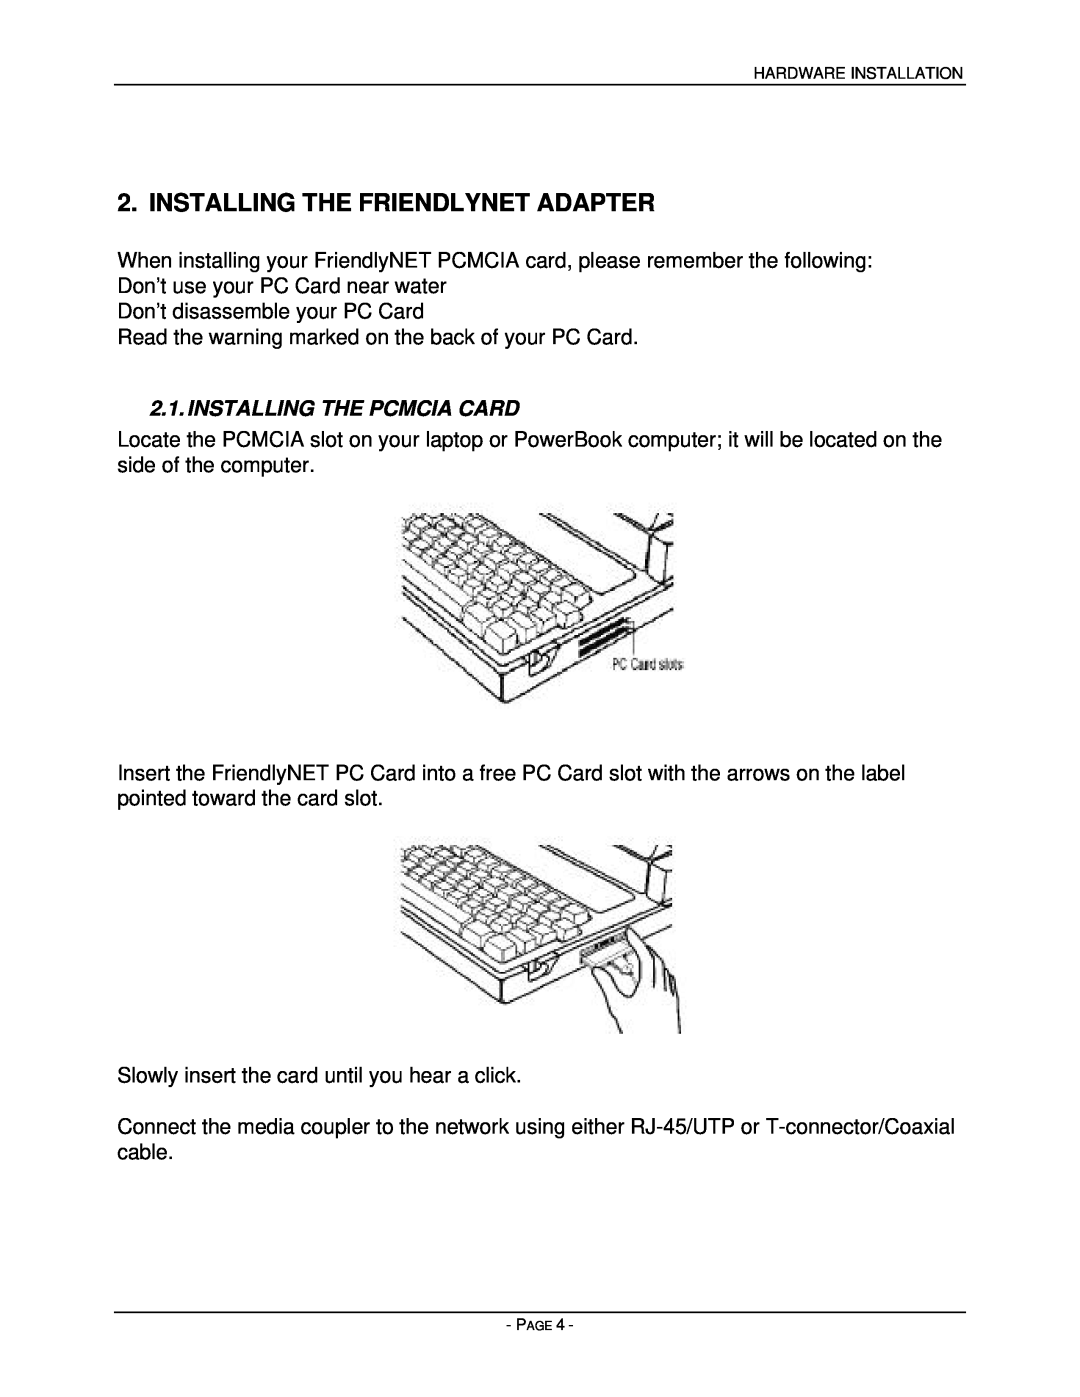 Asante Technologies PCMCIA user manual Installing The Friendlynet Adapter, Installing The Pcmcia Card 